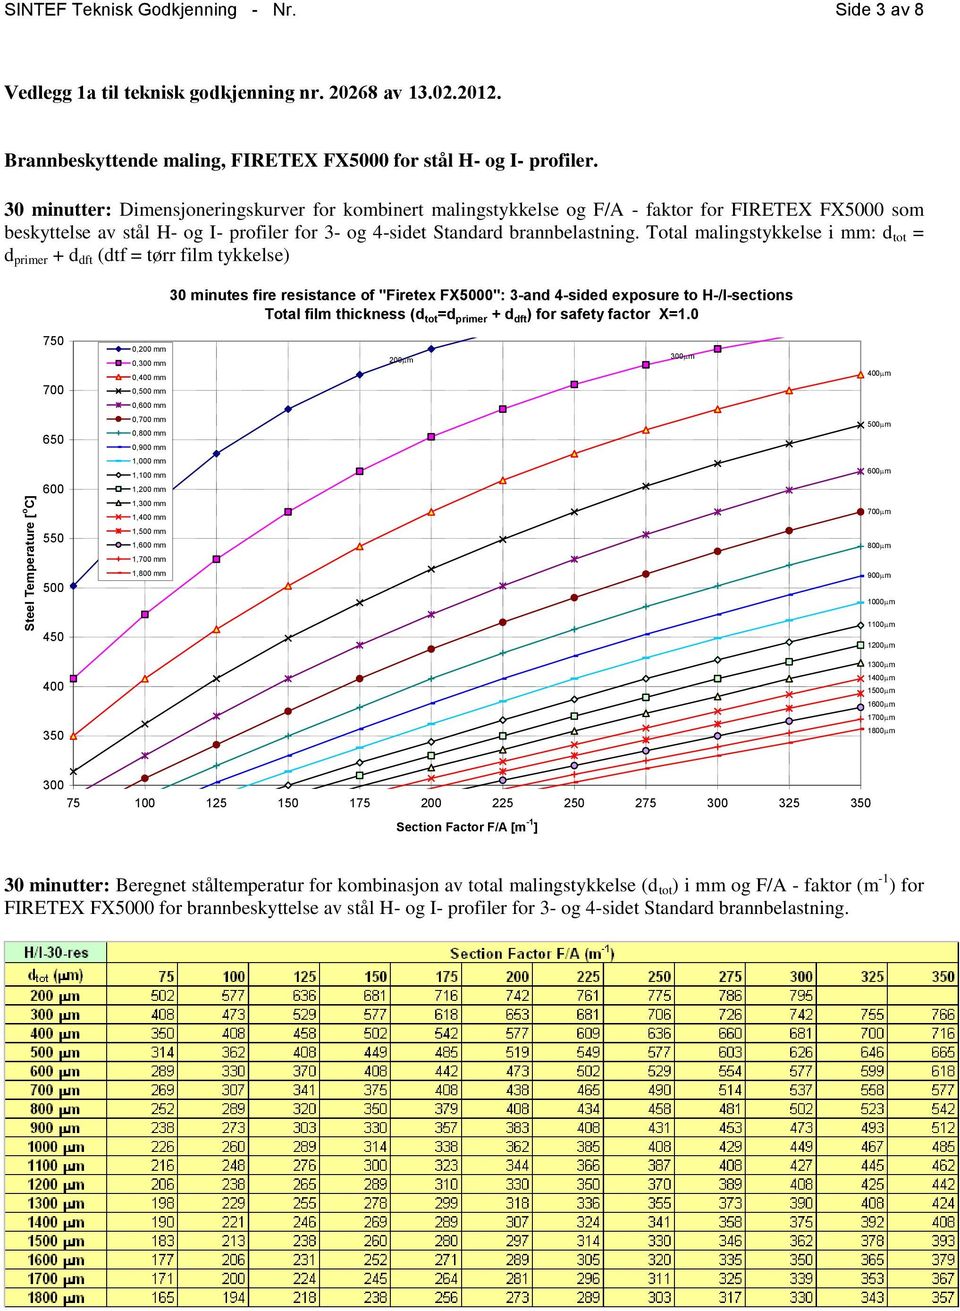 Total malingstykkelse i mm: d tot = d primer + d dft (dtf = tørr film tykkelse) 30 minutes fire resistance of "Firetex FX0": 3-and 4-sided exposure to H-/I-sections 0,200 mm 0, mm 0, mm 0, mm 200mm